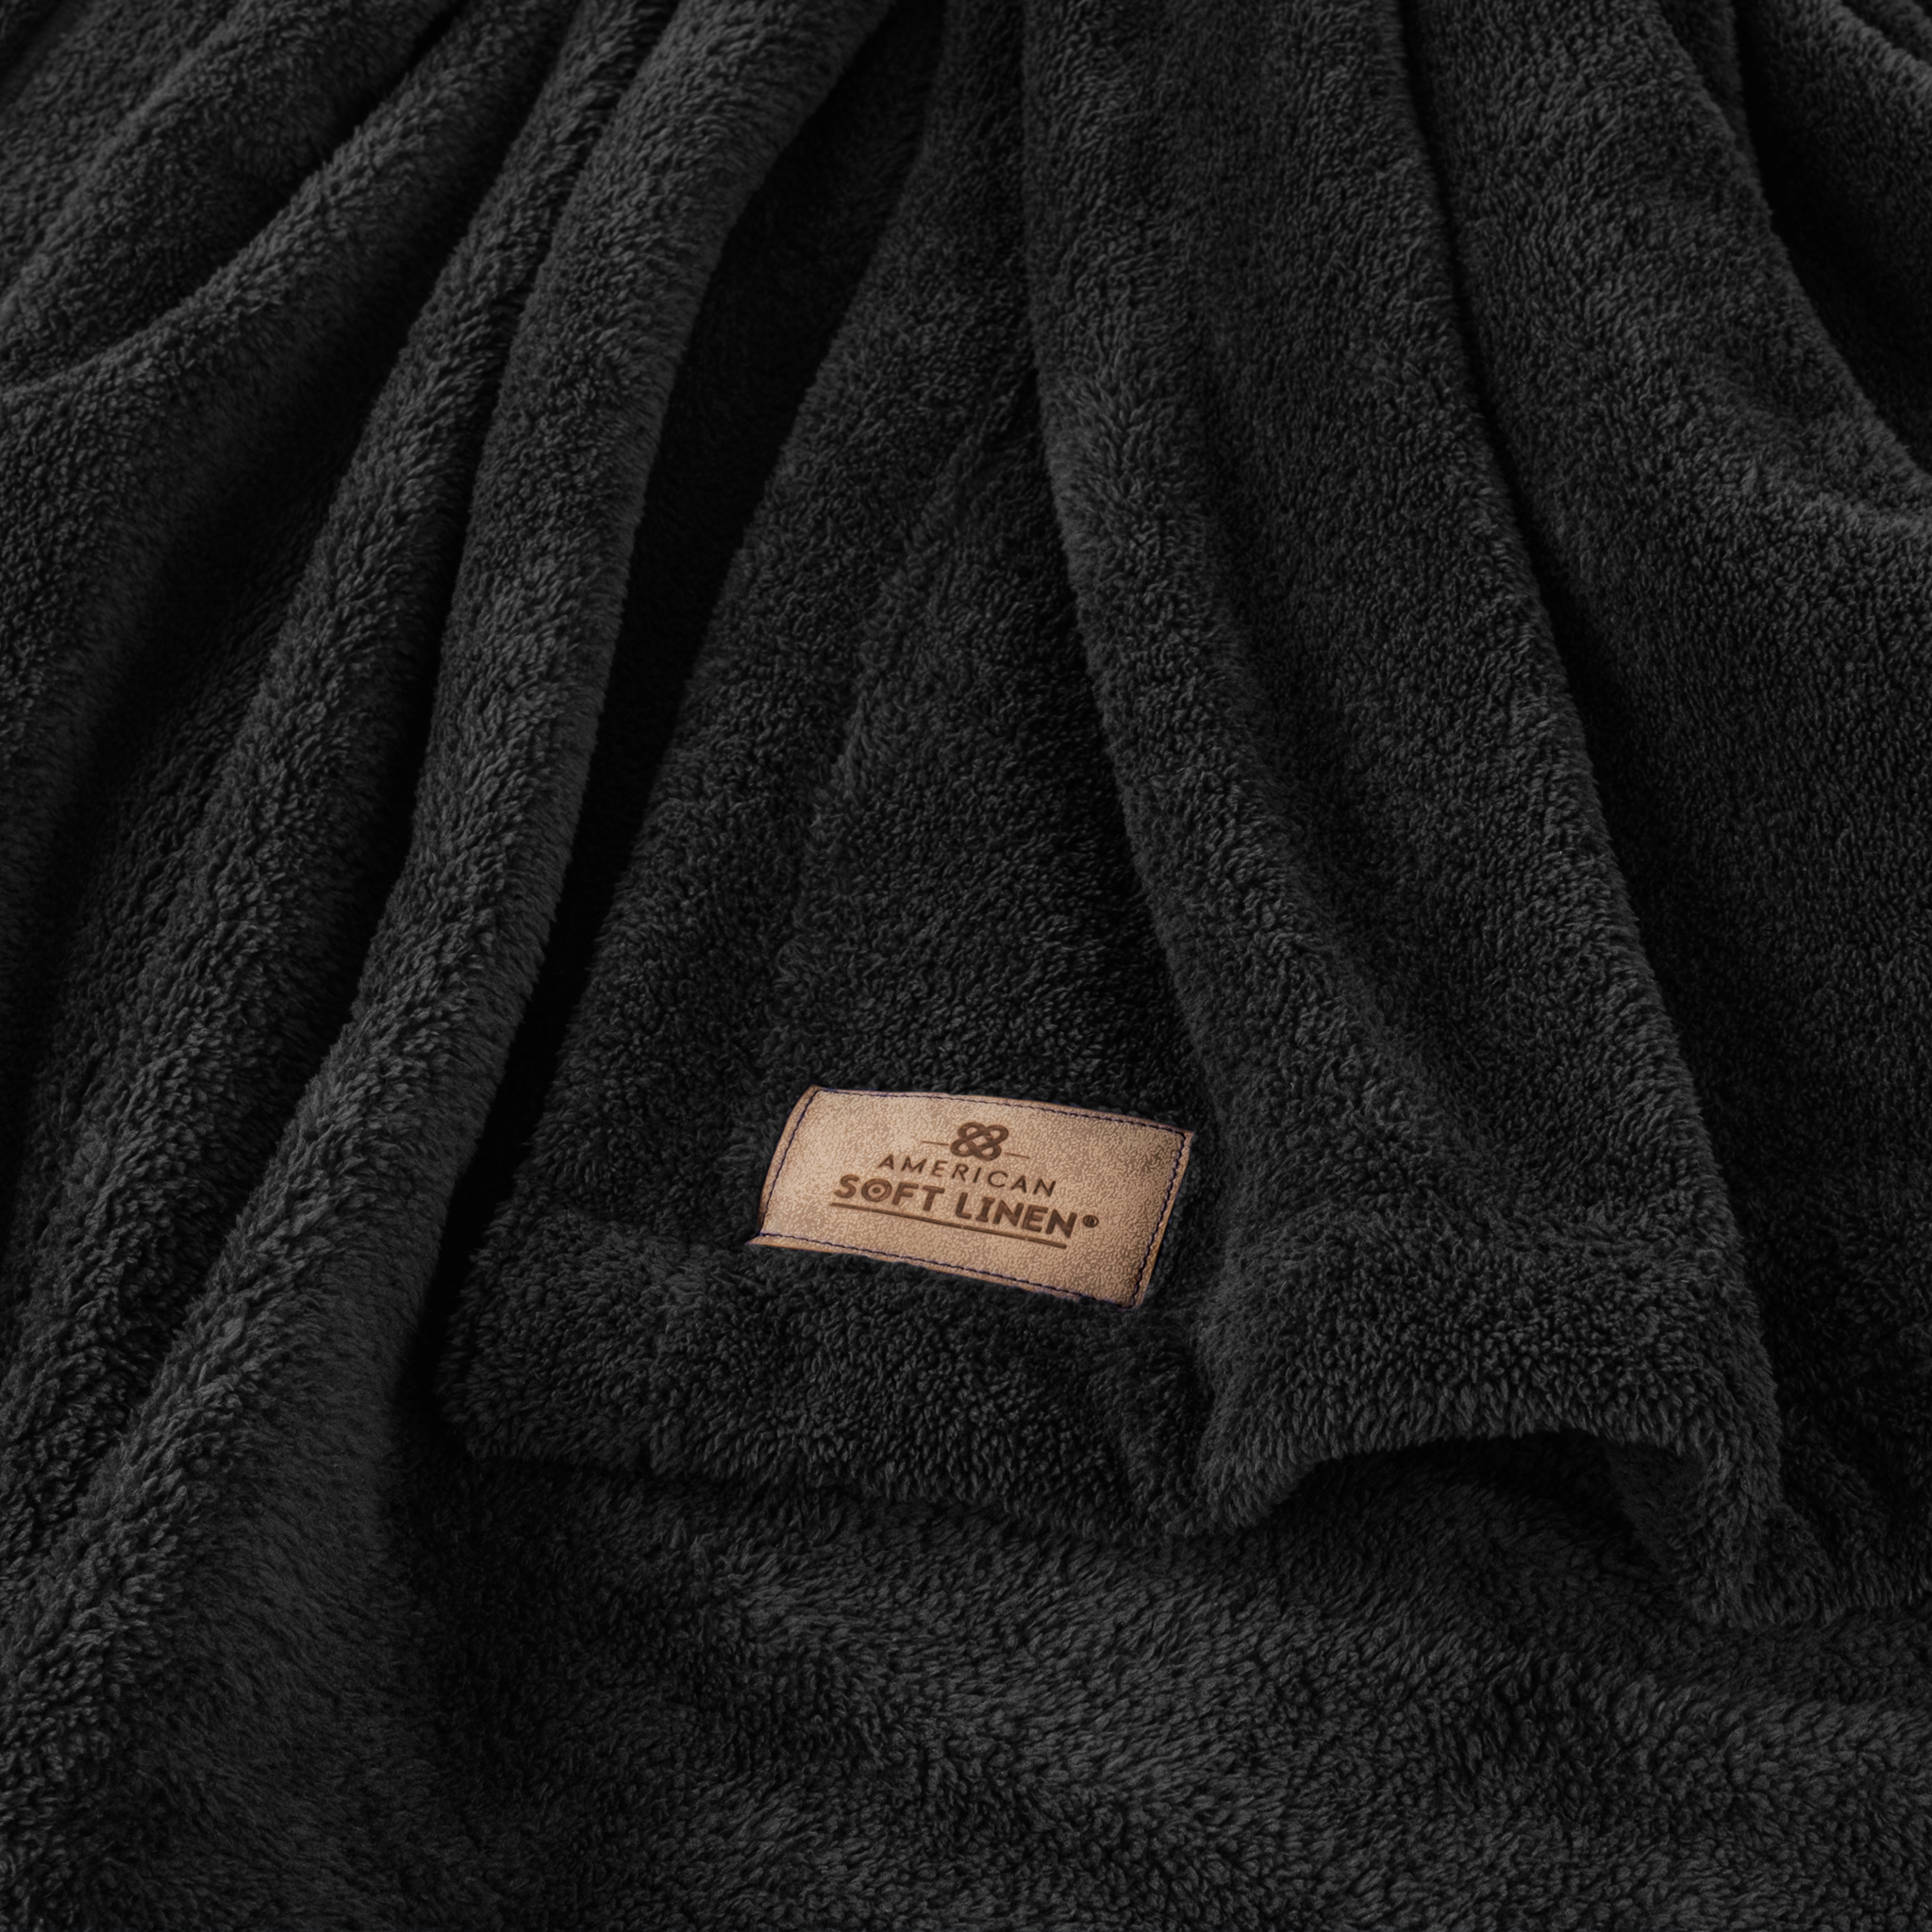 American Soft Linen - Bedding Fleece Blanket - Throw Size 50x60 inches - Black - 4